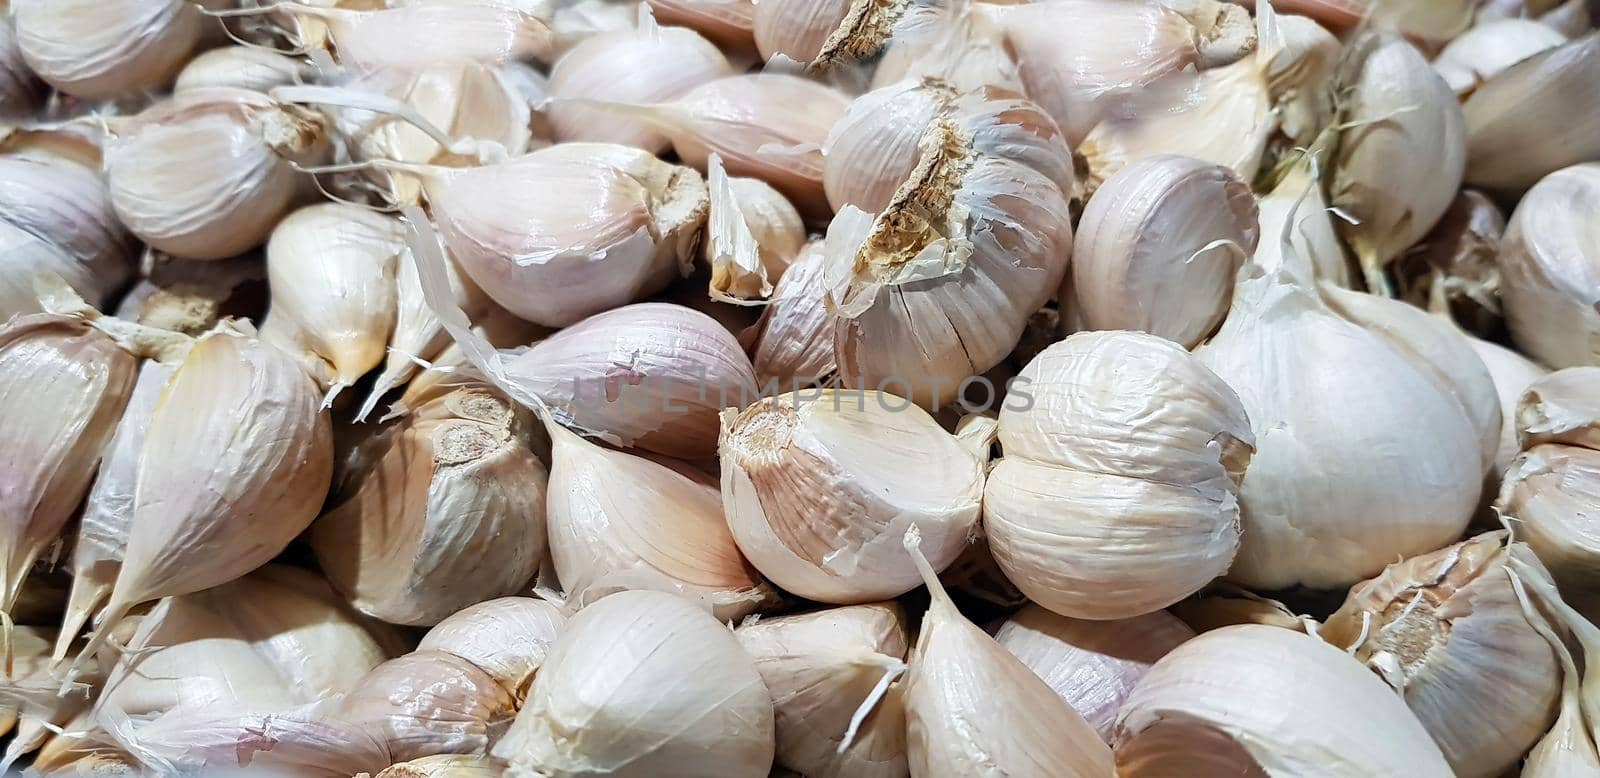 Garlic bulbs on black background, close-up. Organic garlic top view. Food background. Selective focus.